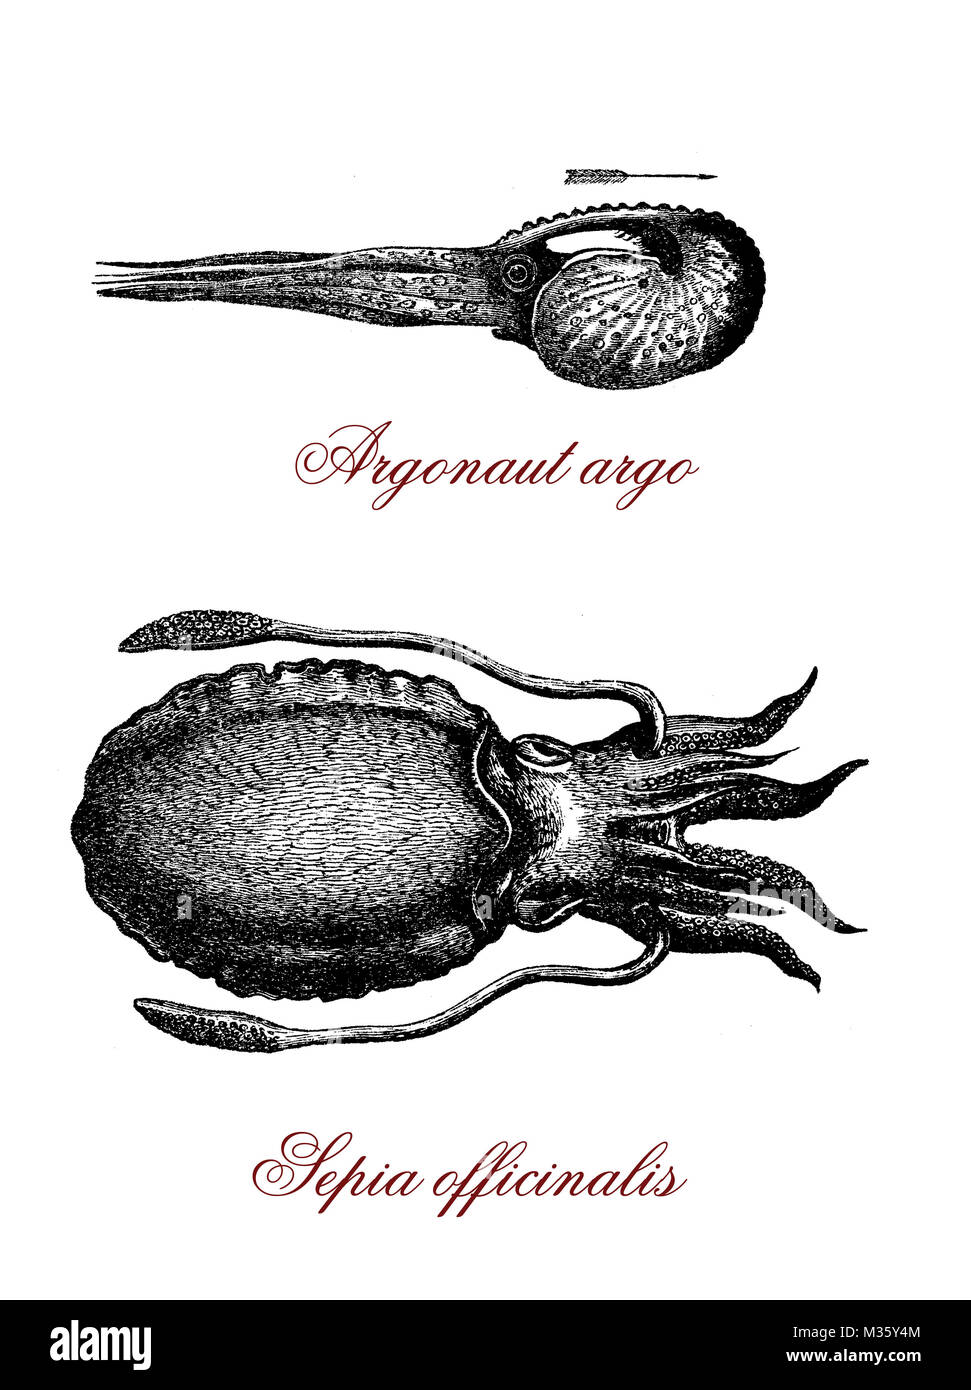 Vintage illustration of common cuttlefish and tropical argonauta argo octopus Stock Photo